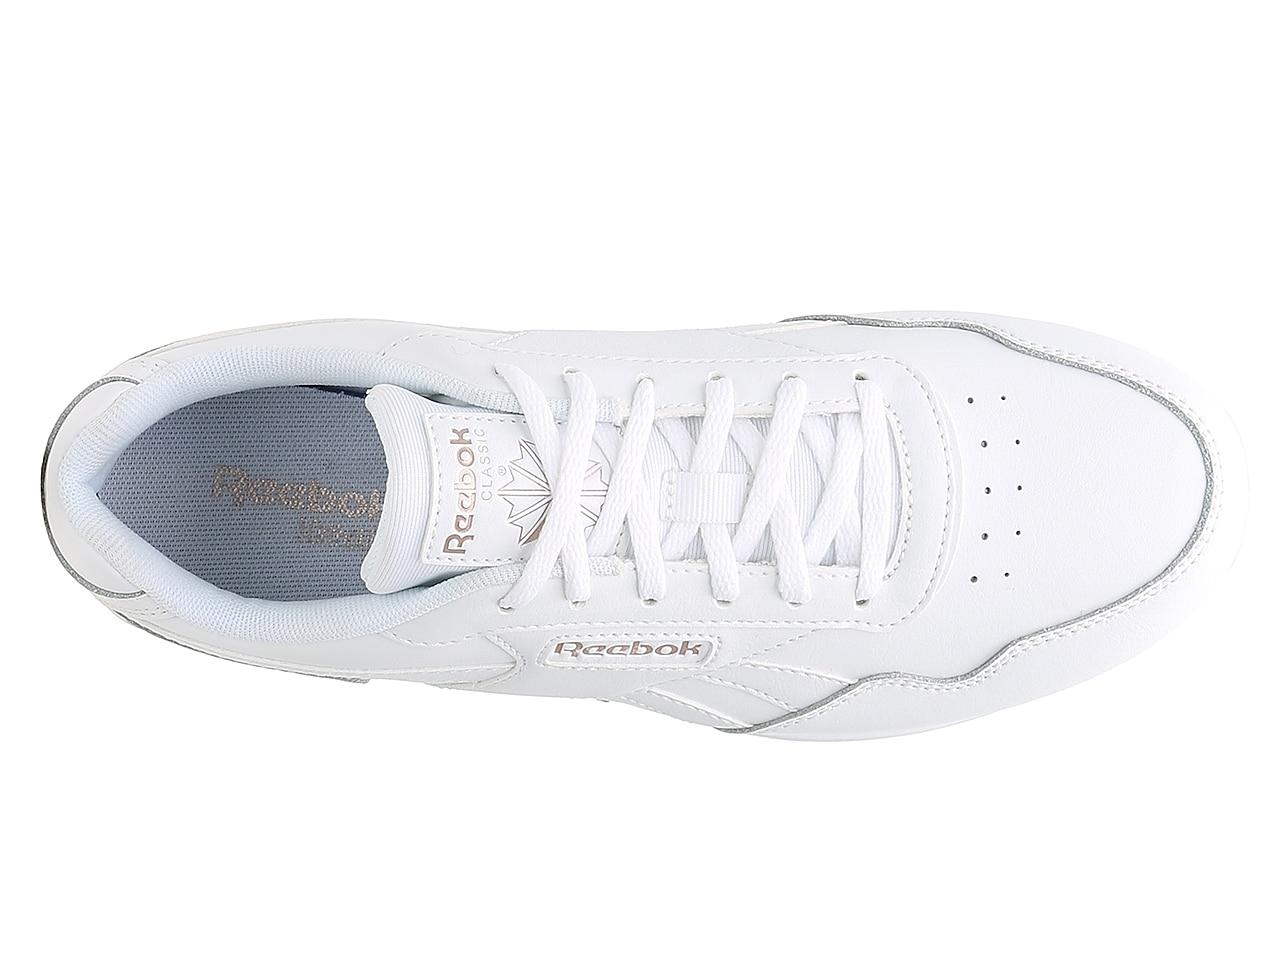 Reebok Leather Harman Platform Sneaker in White/Gold Metallic (White) | Lyst